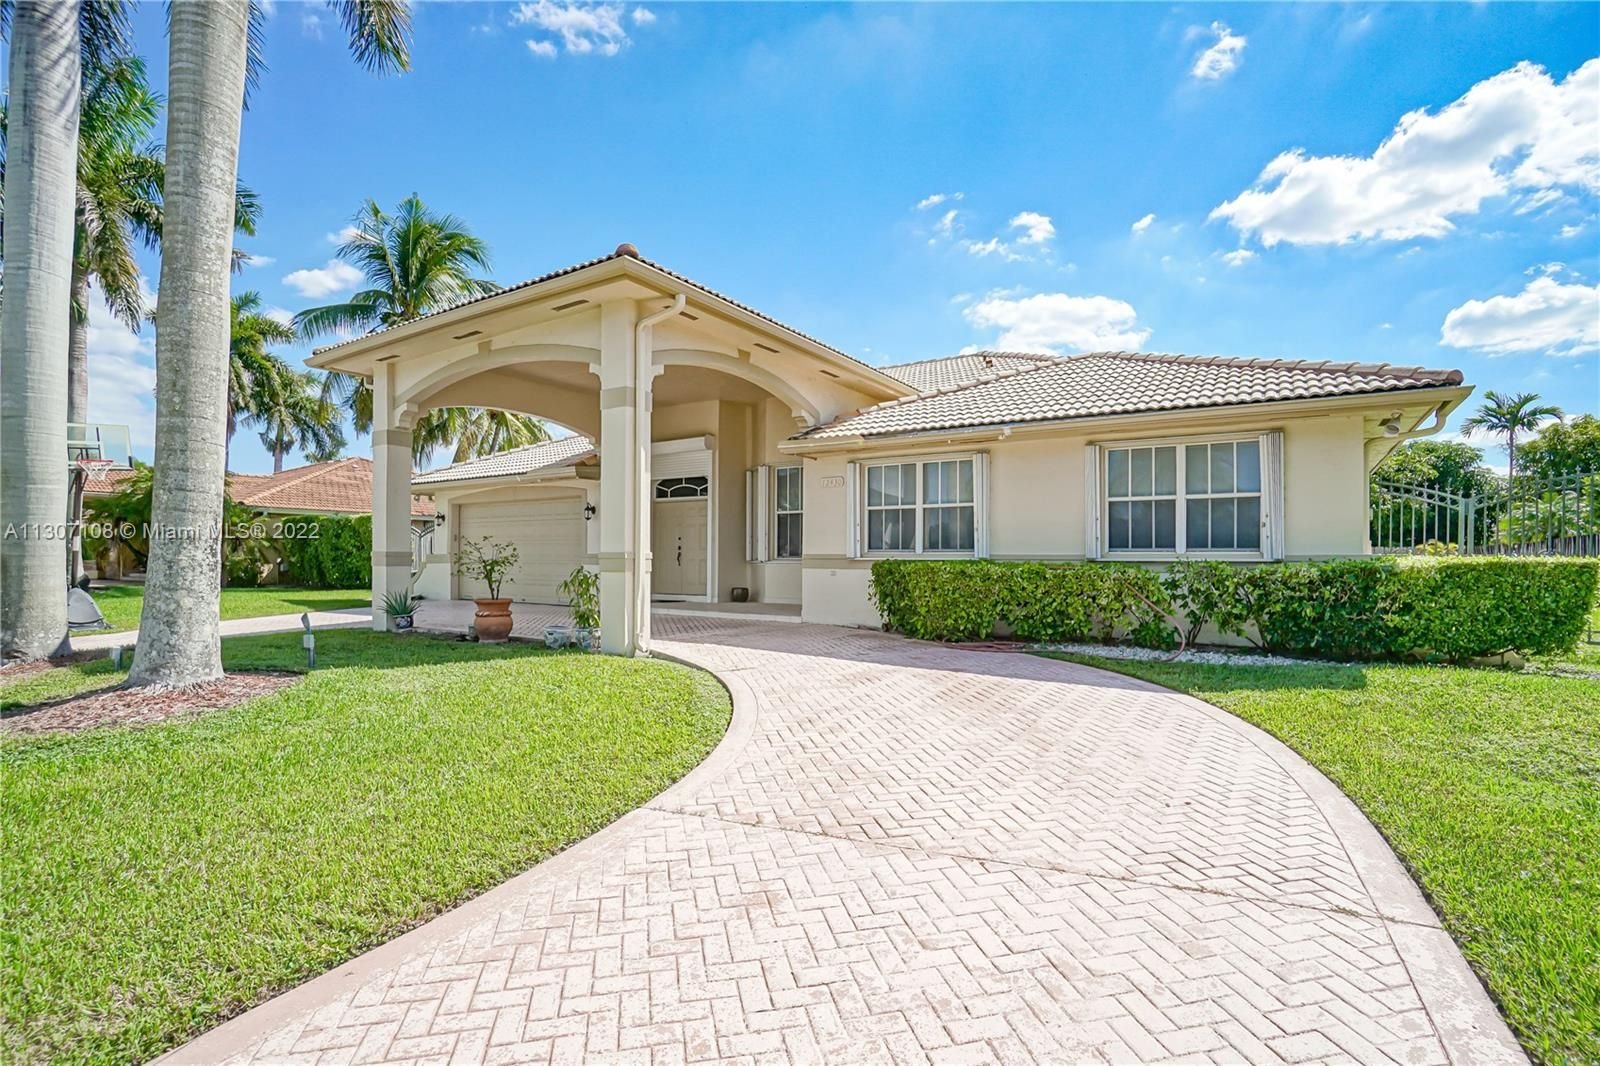 Real estate property located at 12430 75th St, Miami-Dade County, Miami, FL